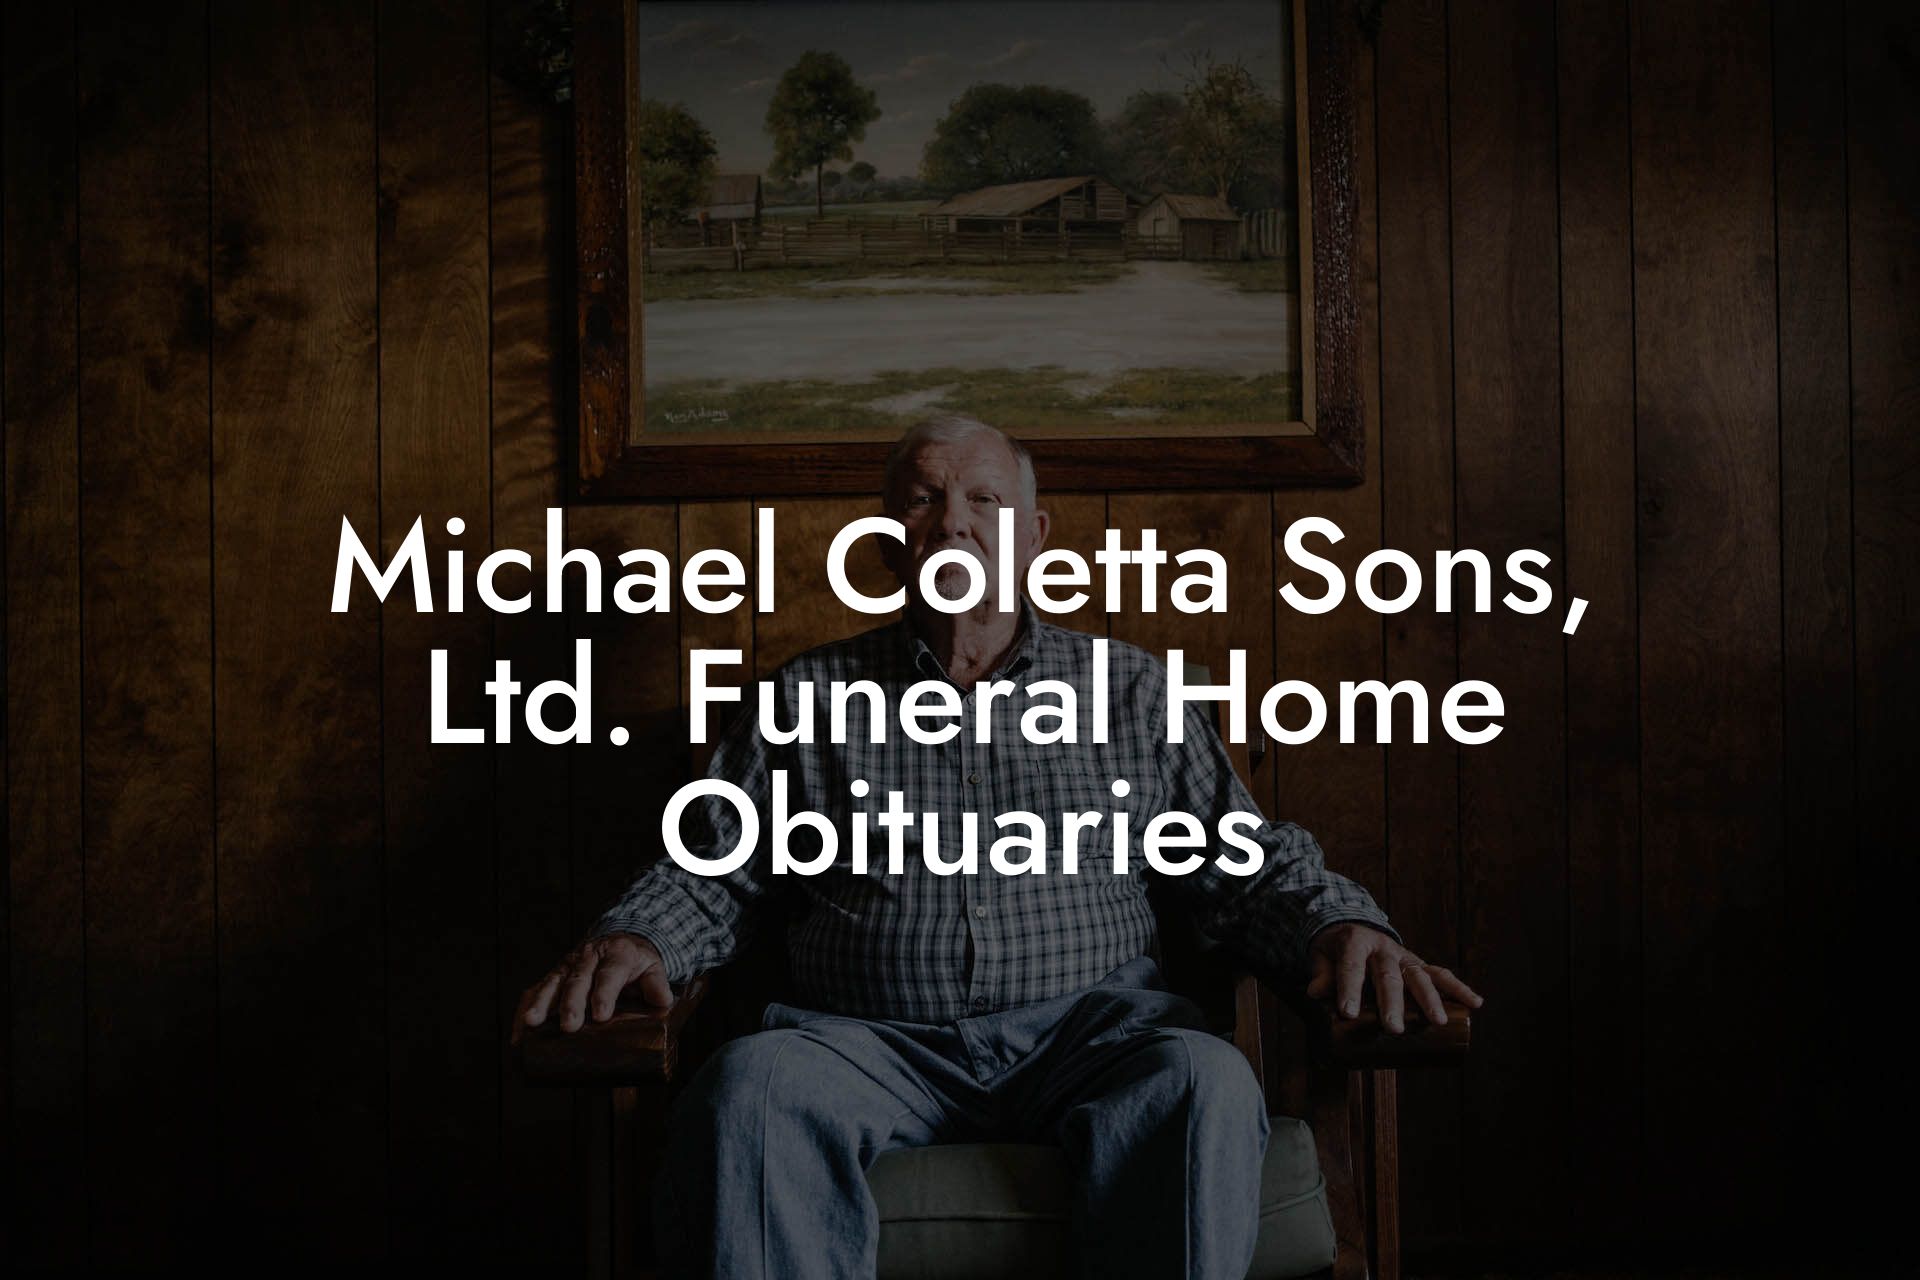 Michael Coletta Sons, Ltd. Funeral Home Obituaries